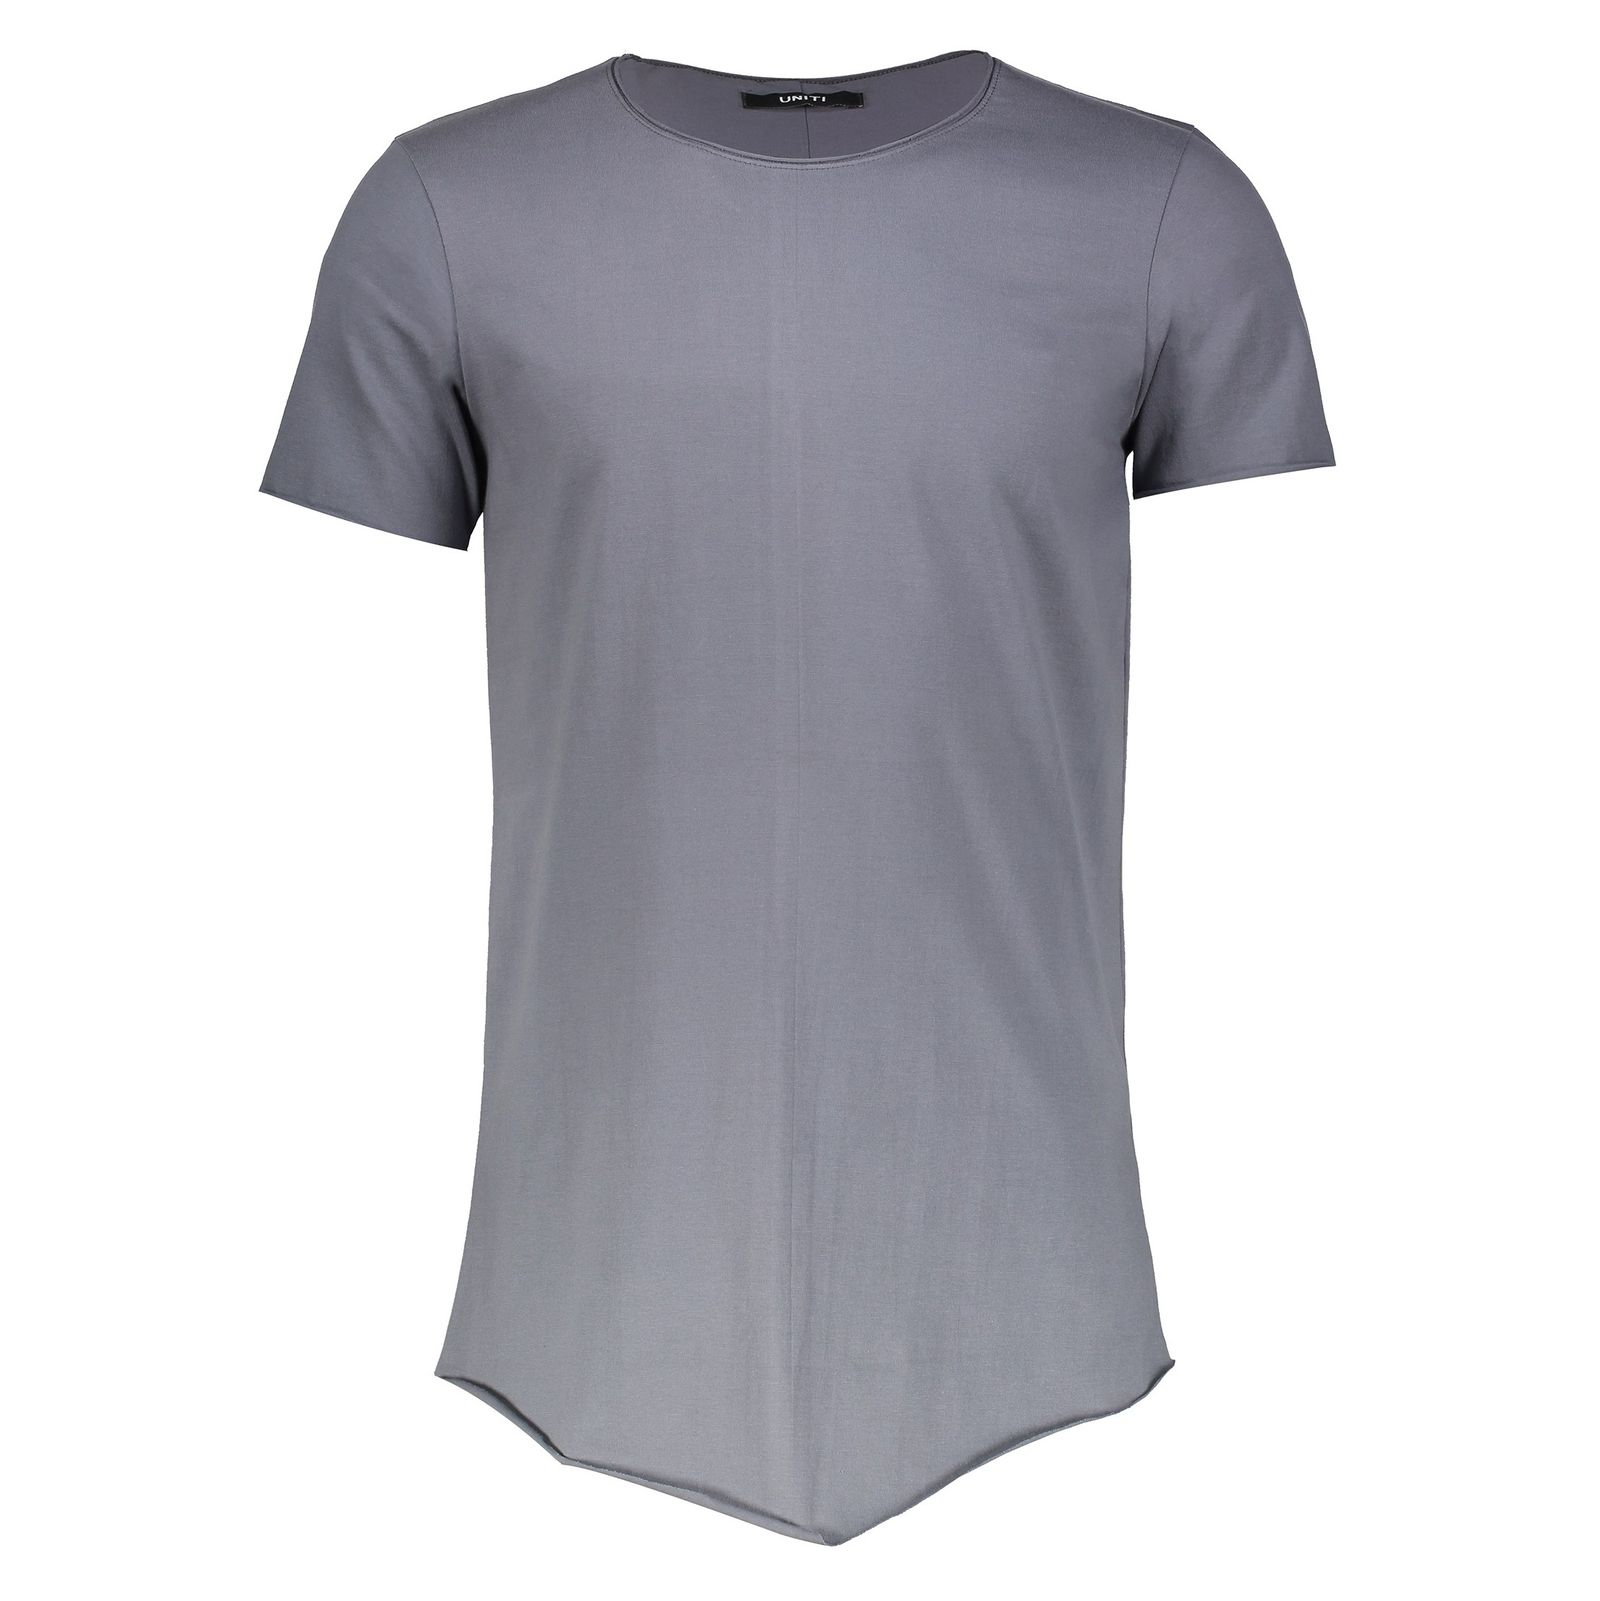 تی شرت نخی یقه گرد مردانه FM - یونیتی - طوسي - 2